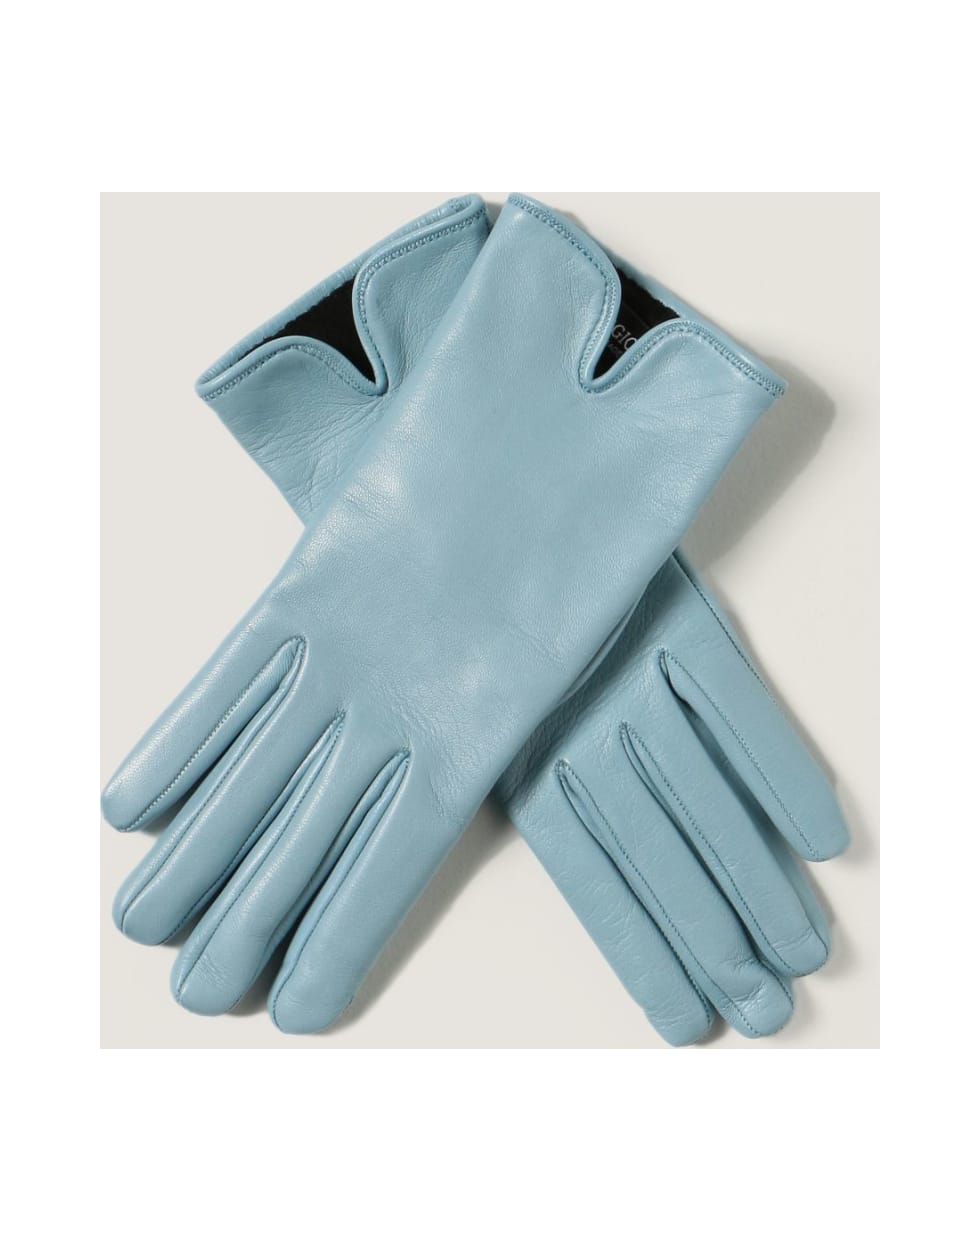 Giorgio Armani Gloves Giorgio Armani Gloves In Lambskin - Gnawed Blue